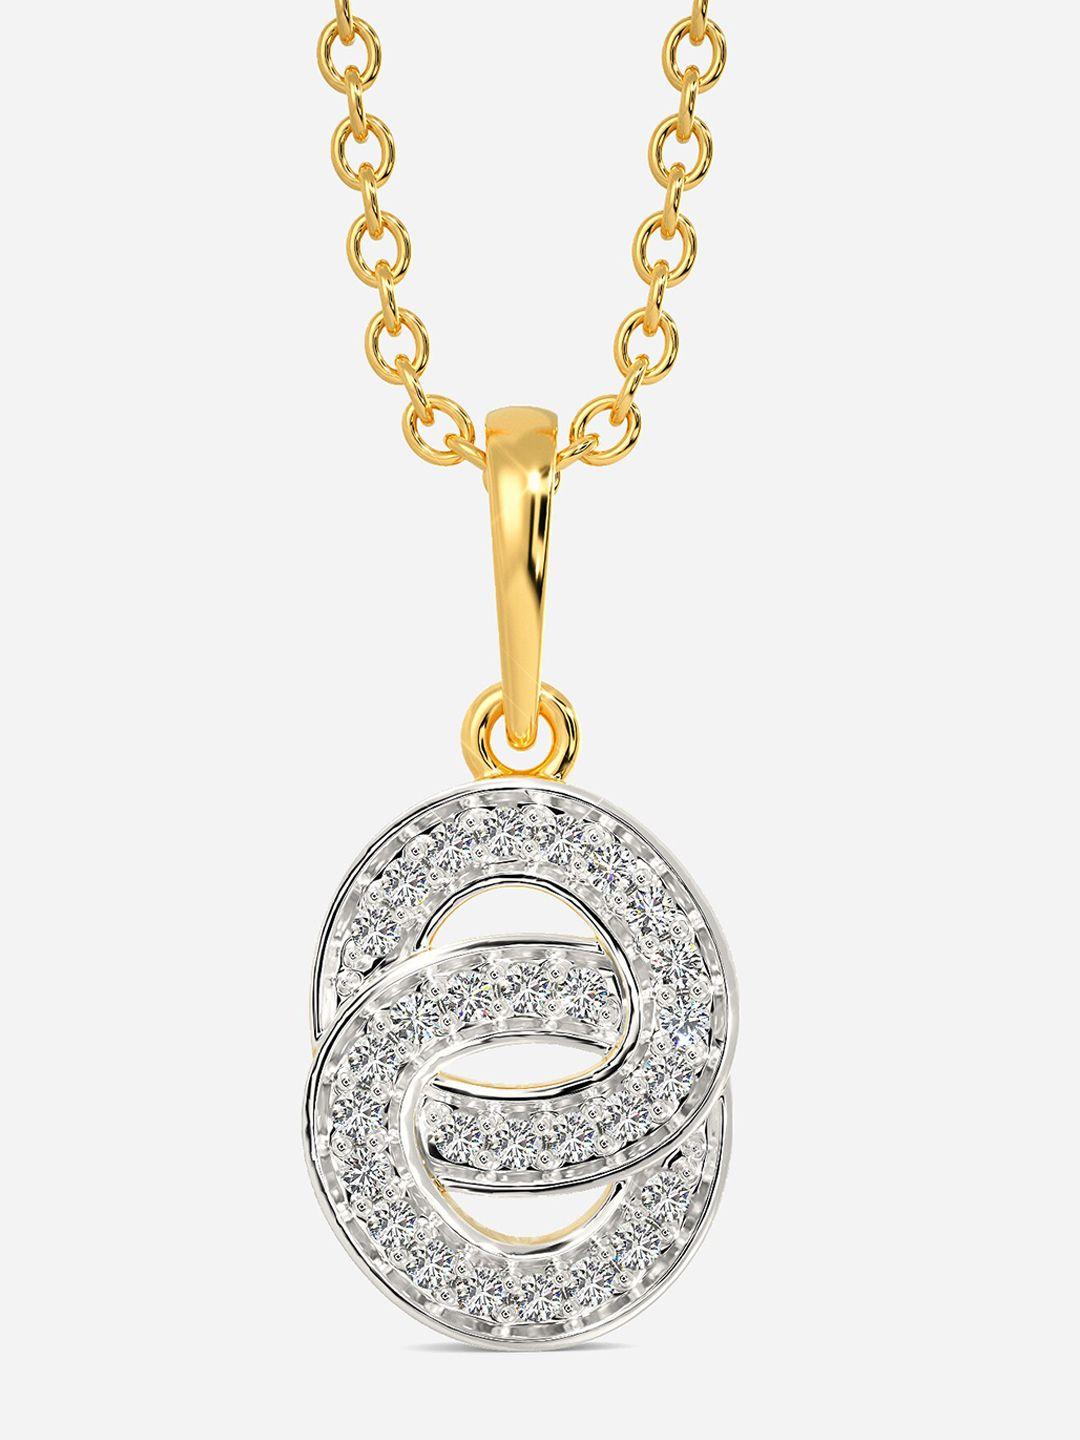 melorra snowflake dreams diamond-studded rhodium-plated 18kt gold pendant- 1.66 gm